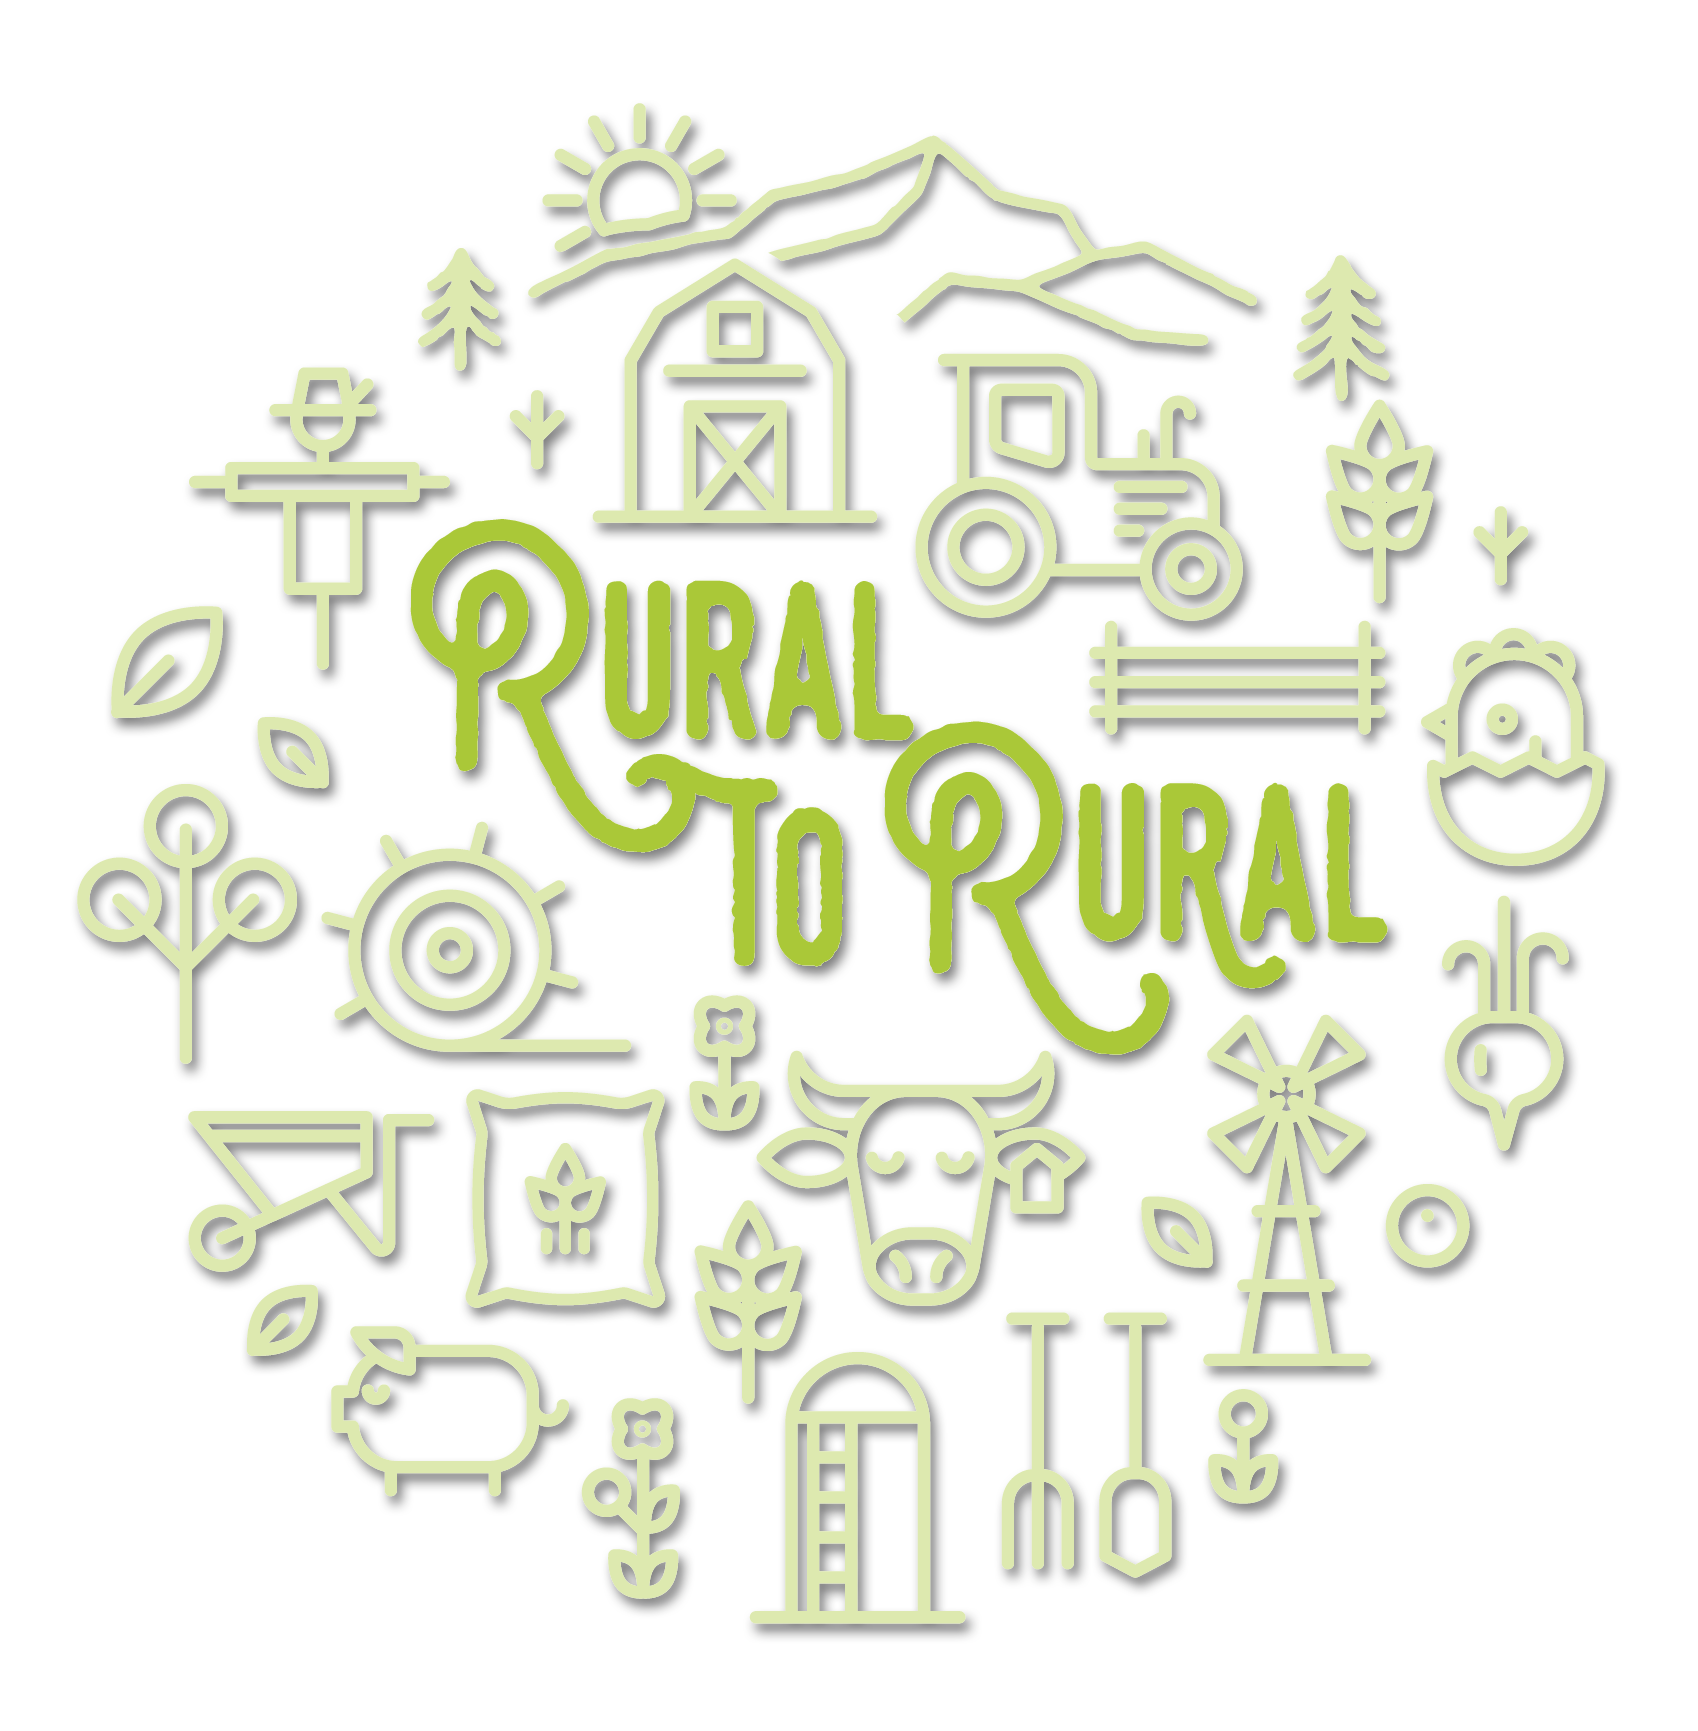 Rural to Rural